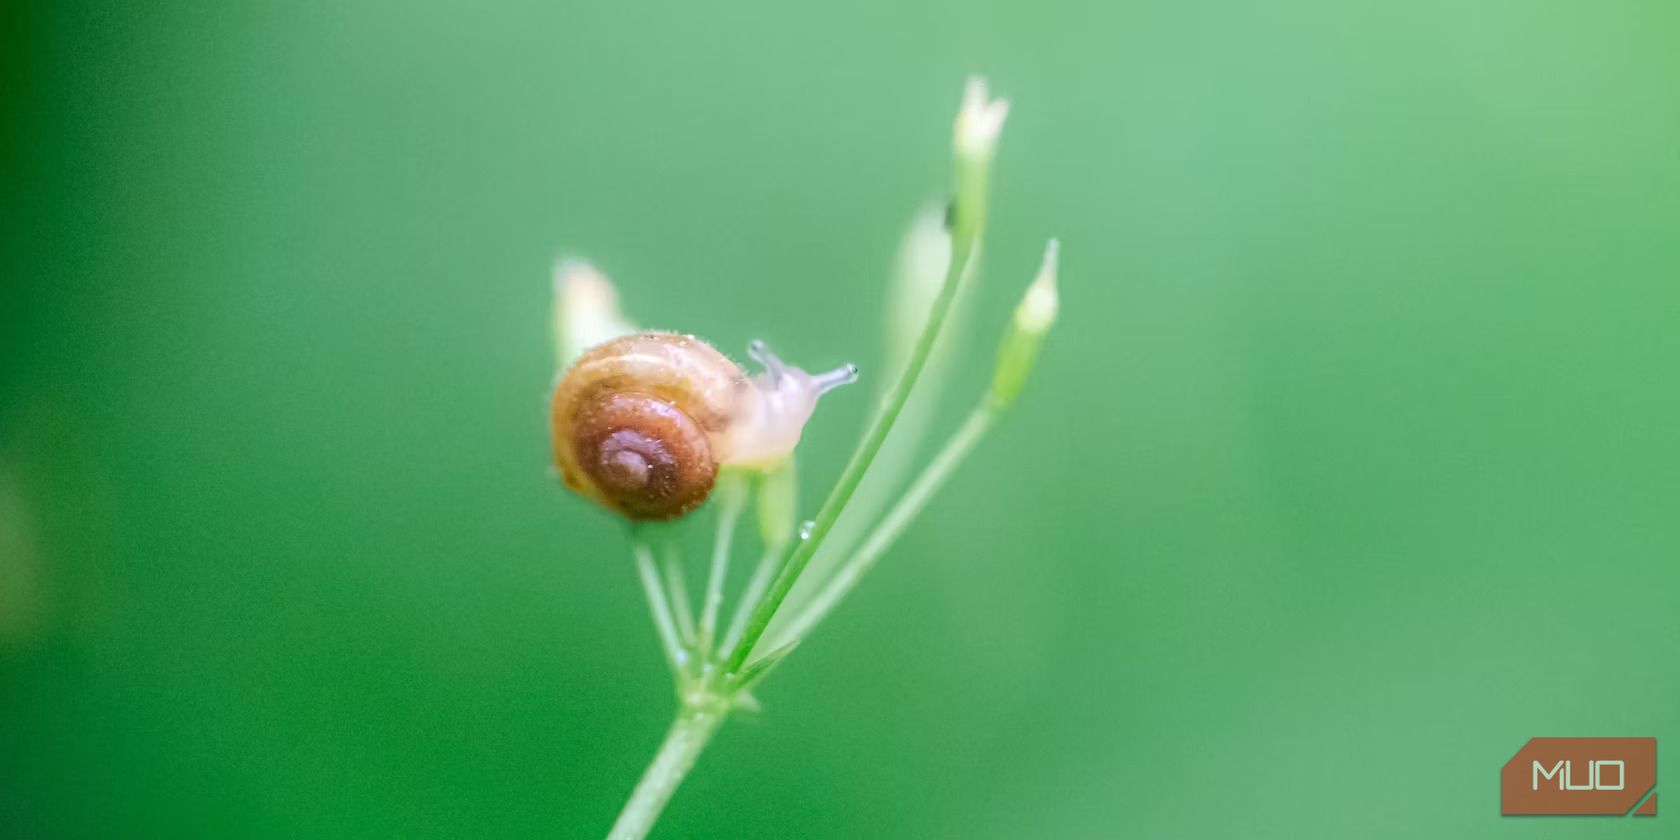 Tiny Snail on Plant